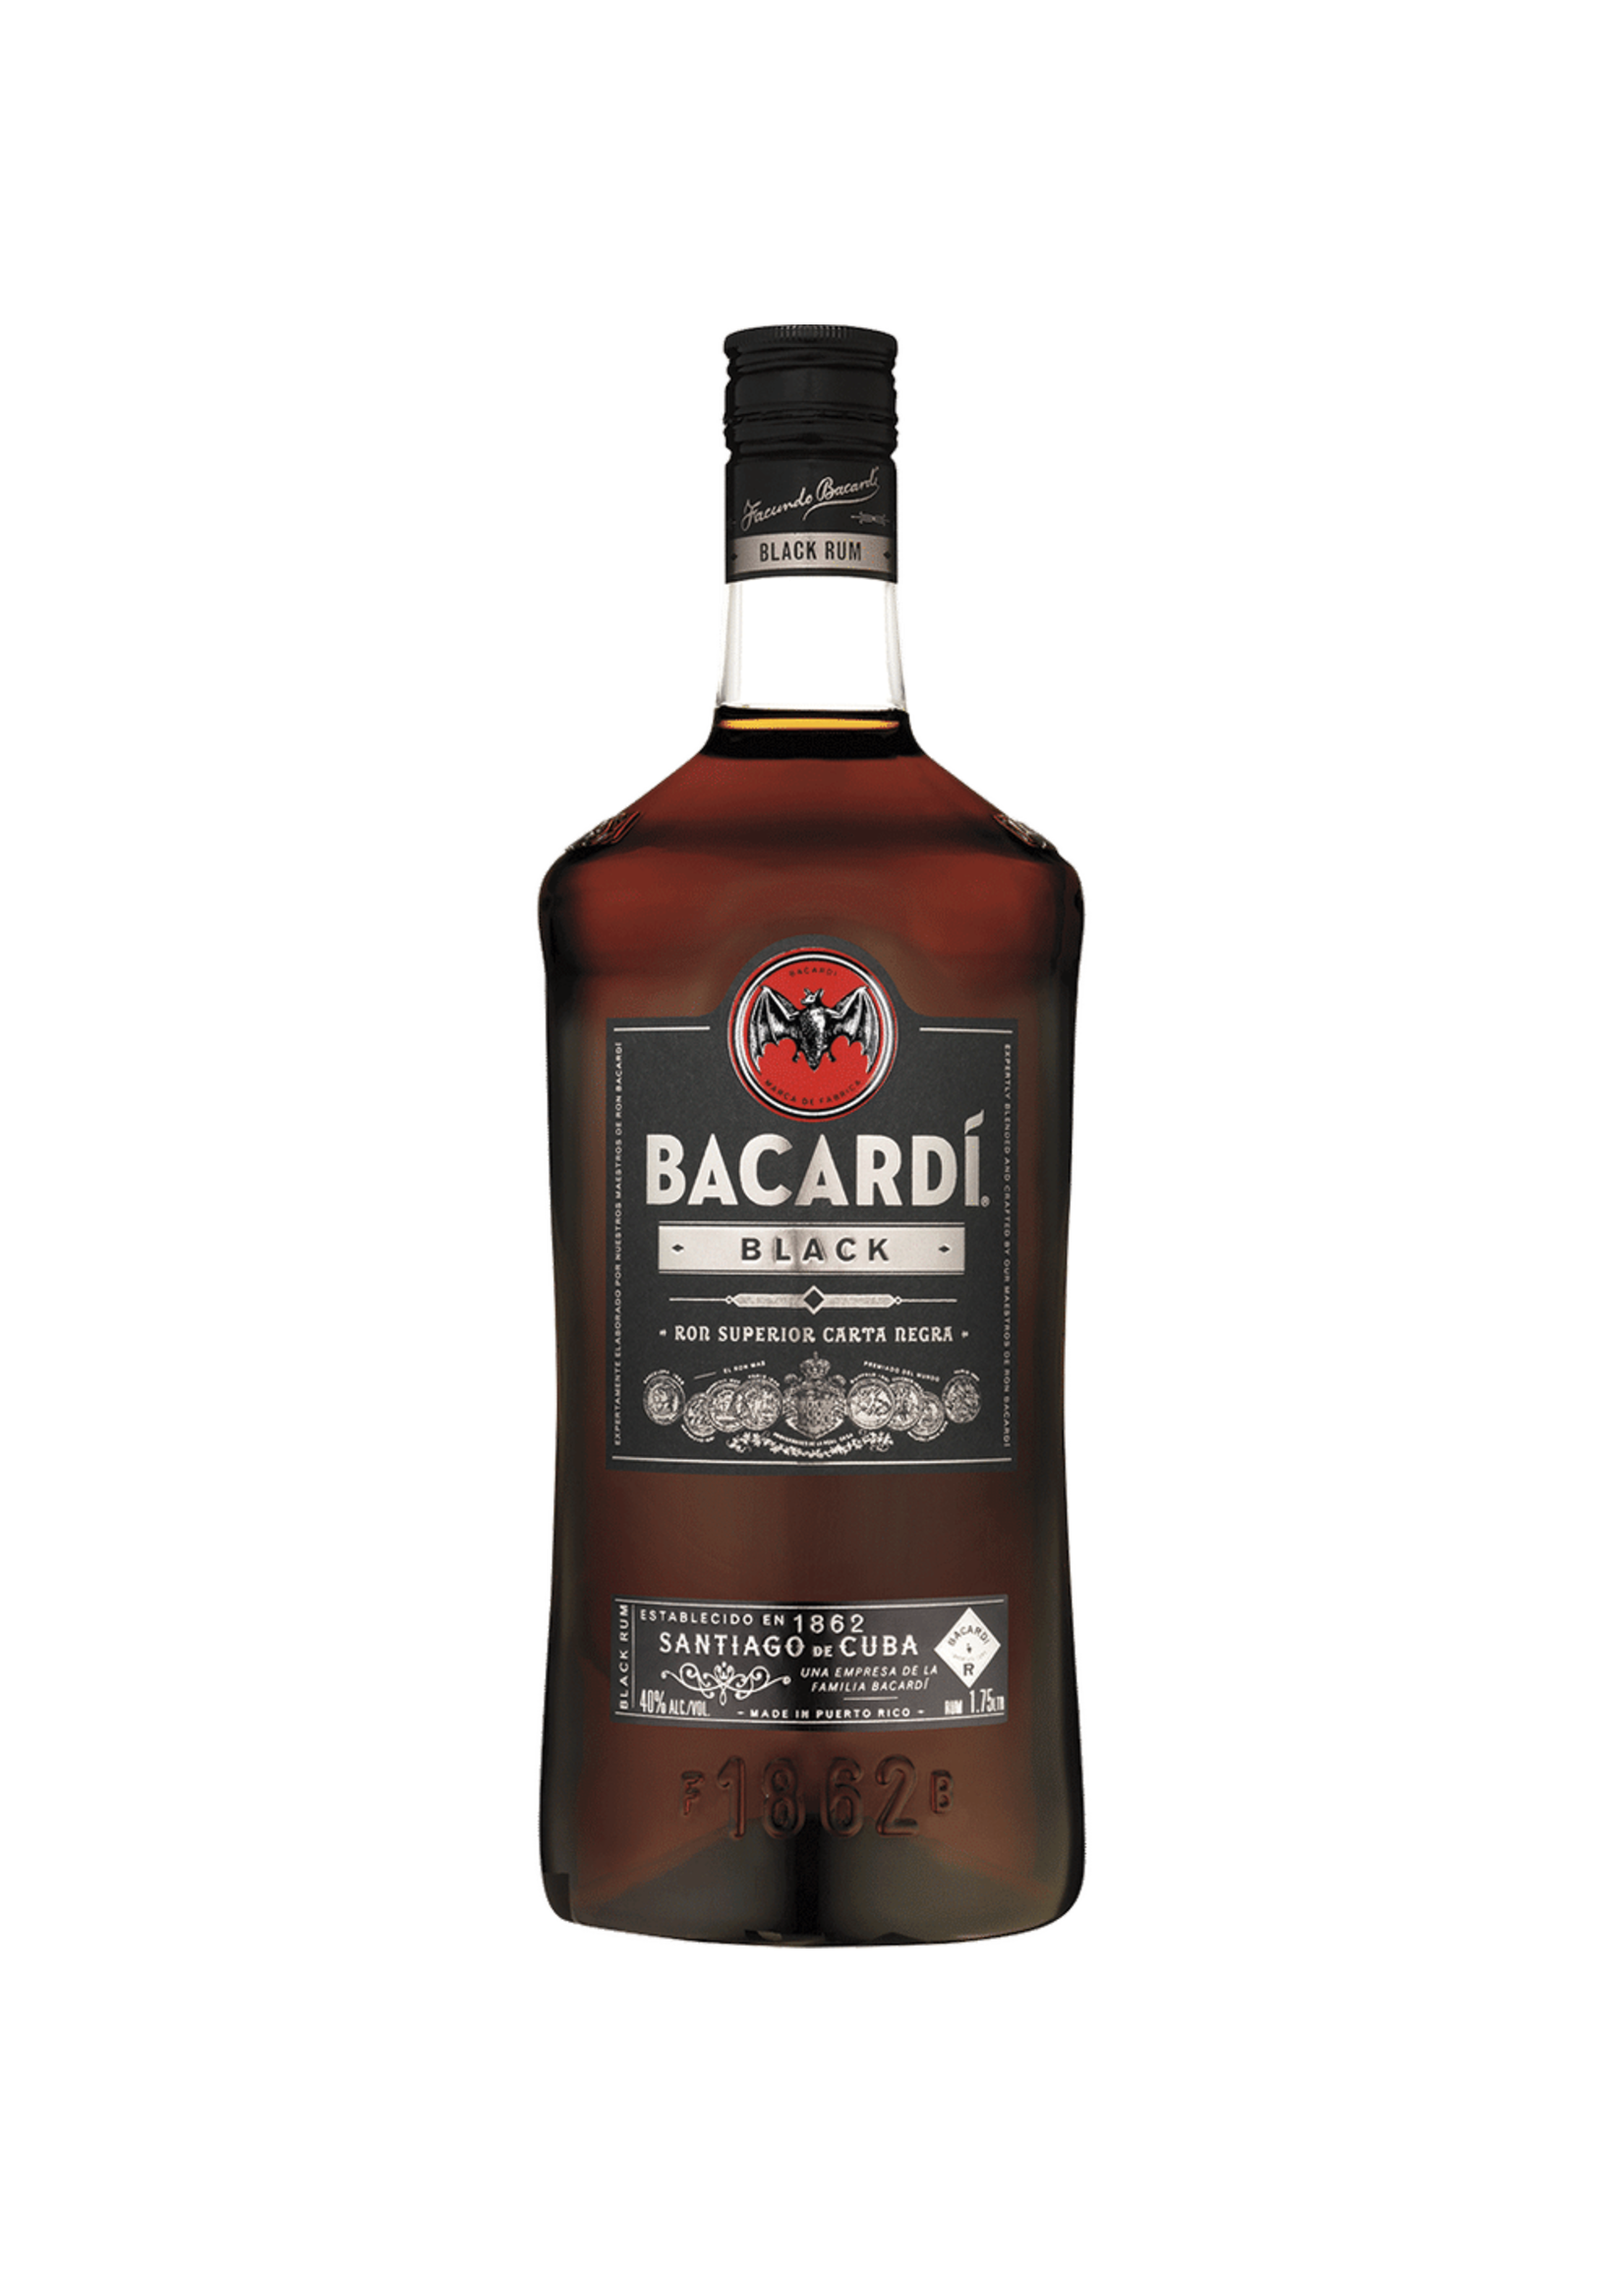 Bacardi BACARDI BLACK RUM 80PF 1.75 LTR